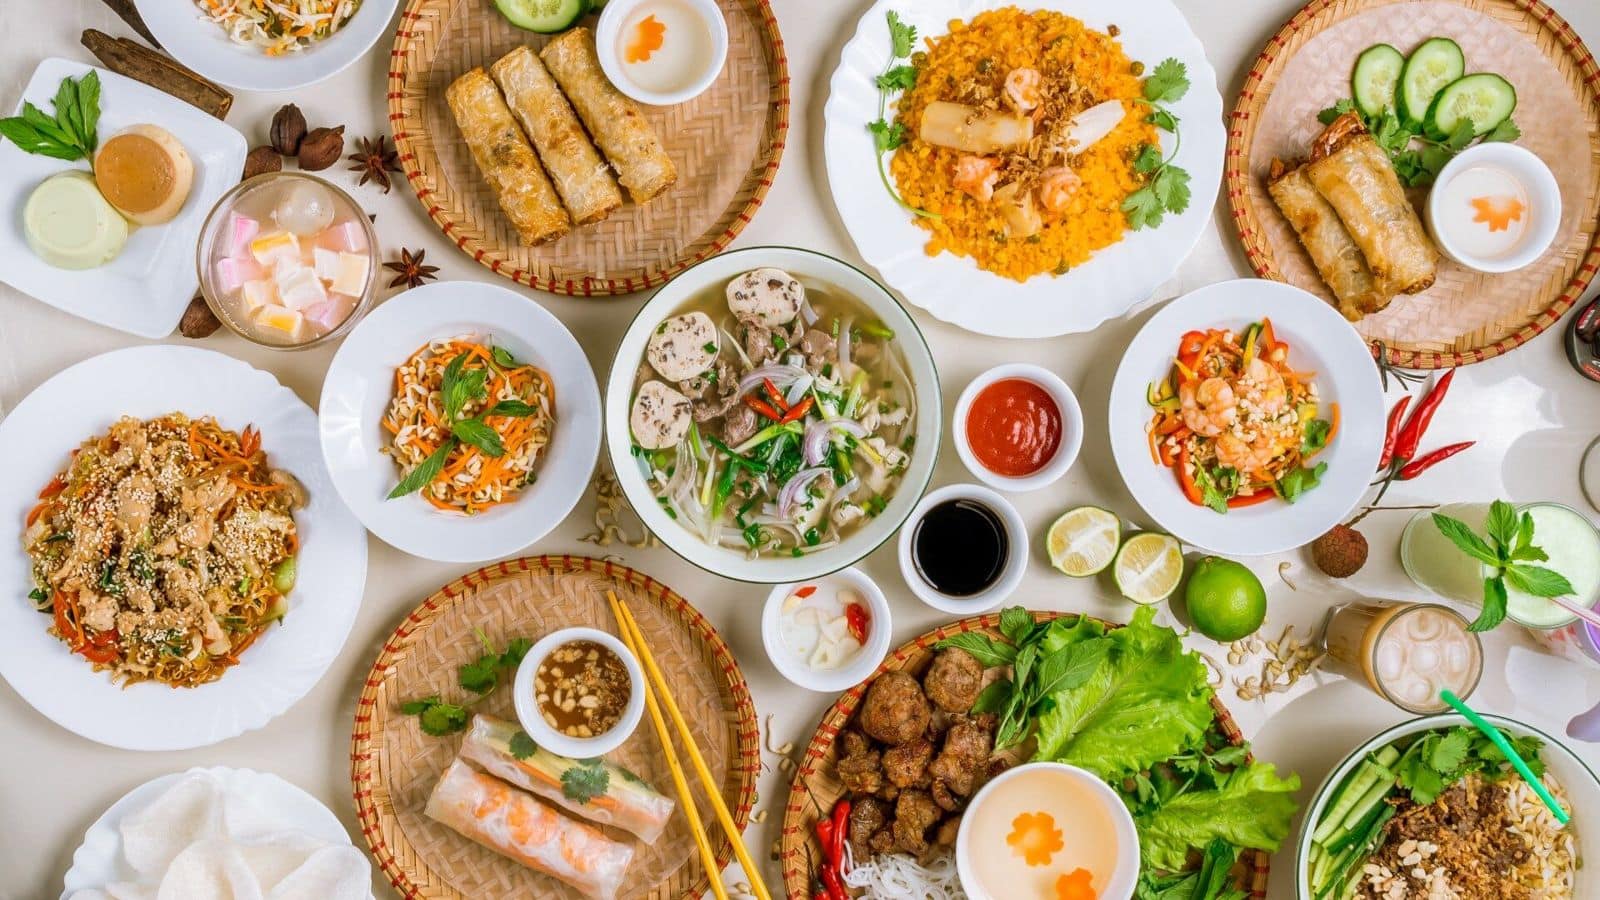 Enjoy a taste of Hanoi's vibrant culinary scene